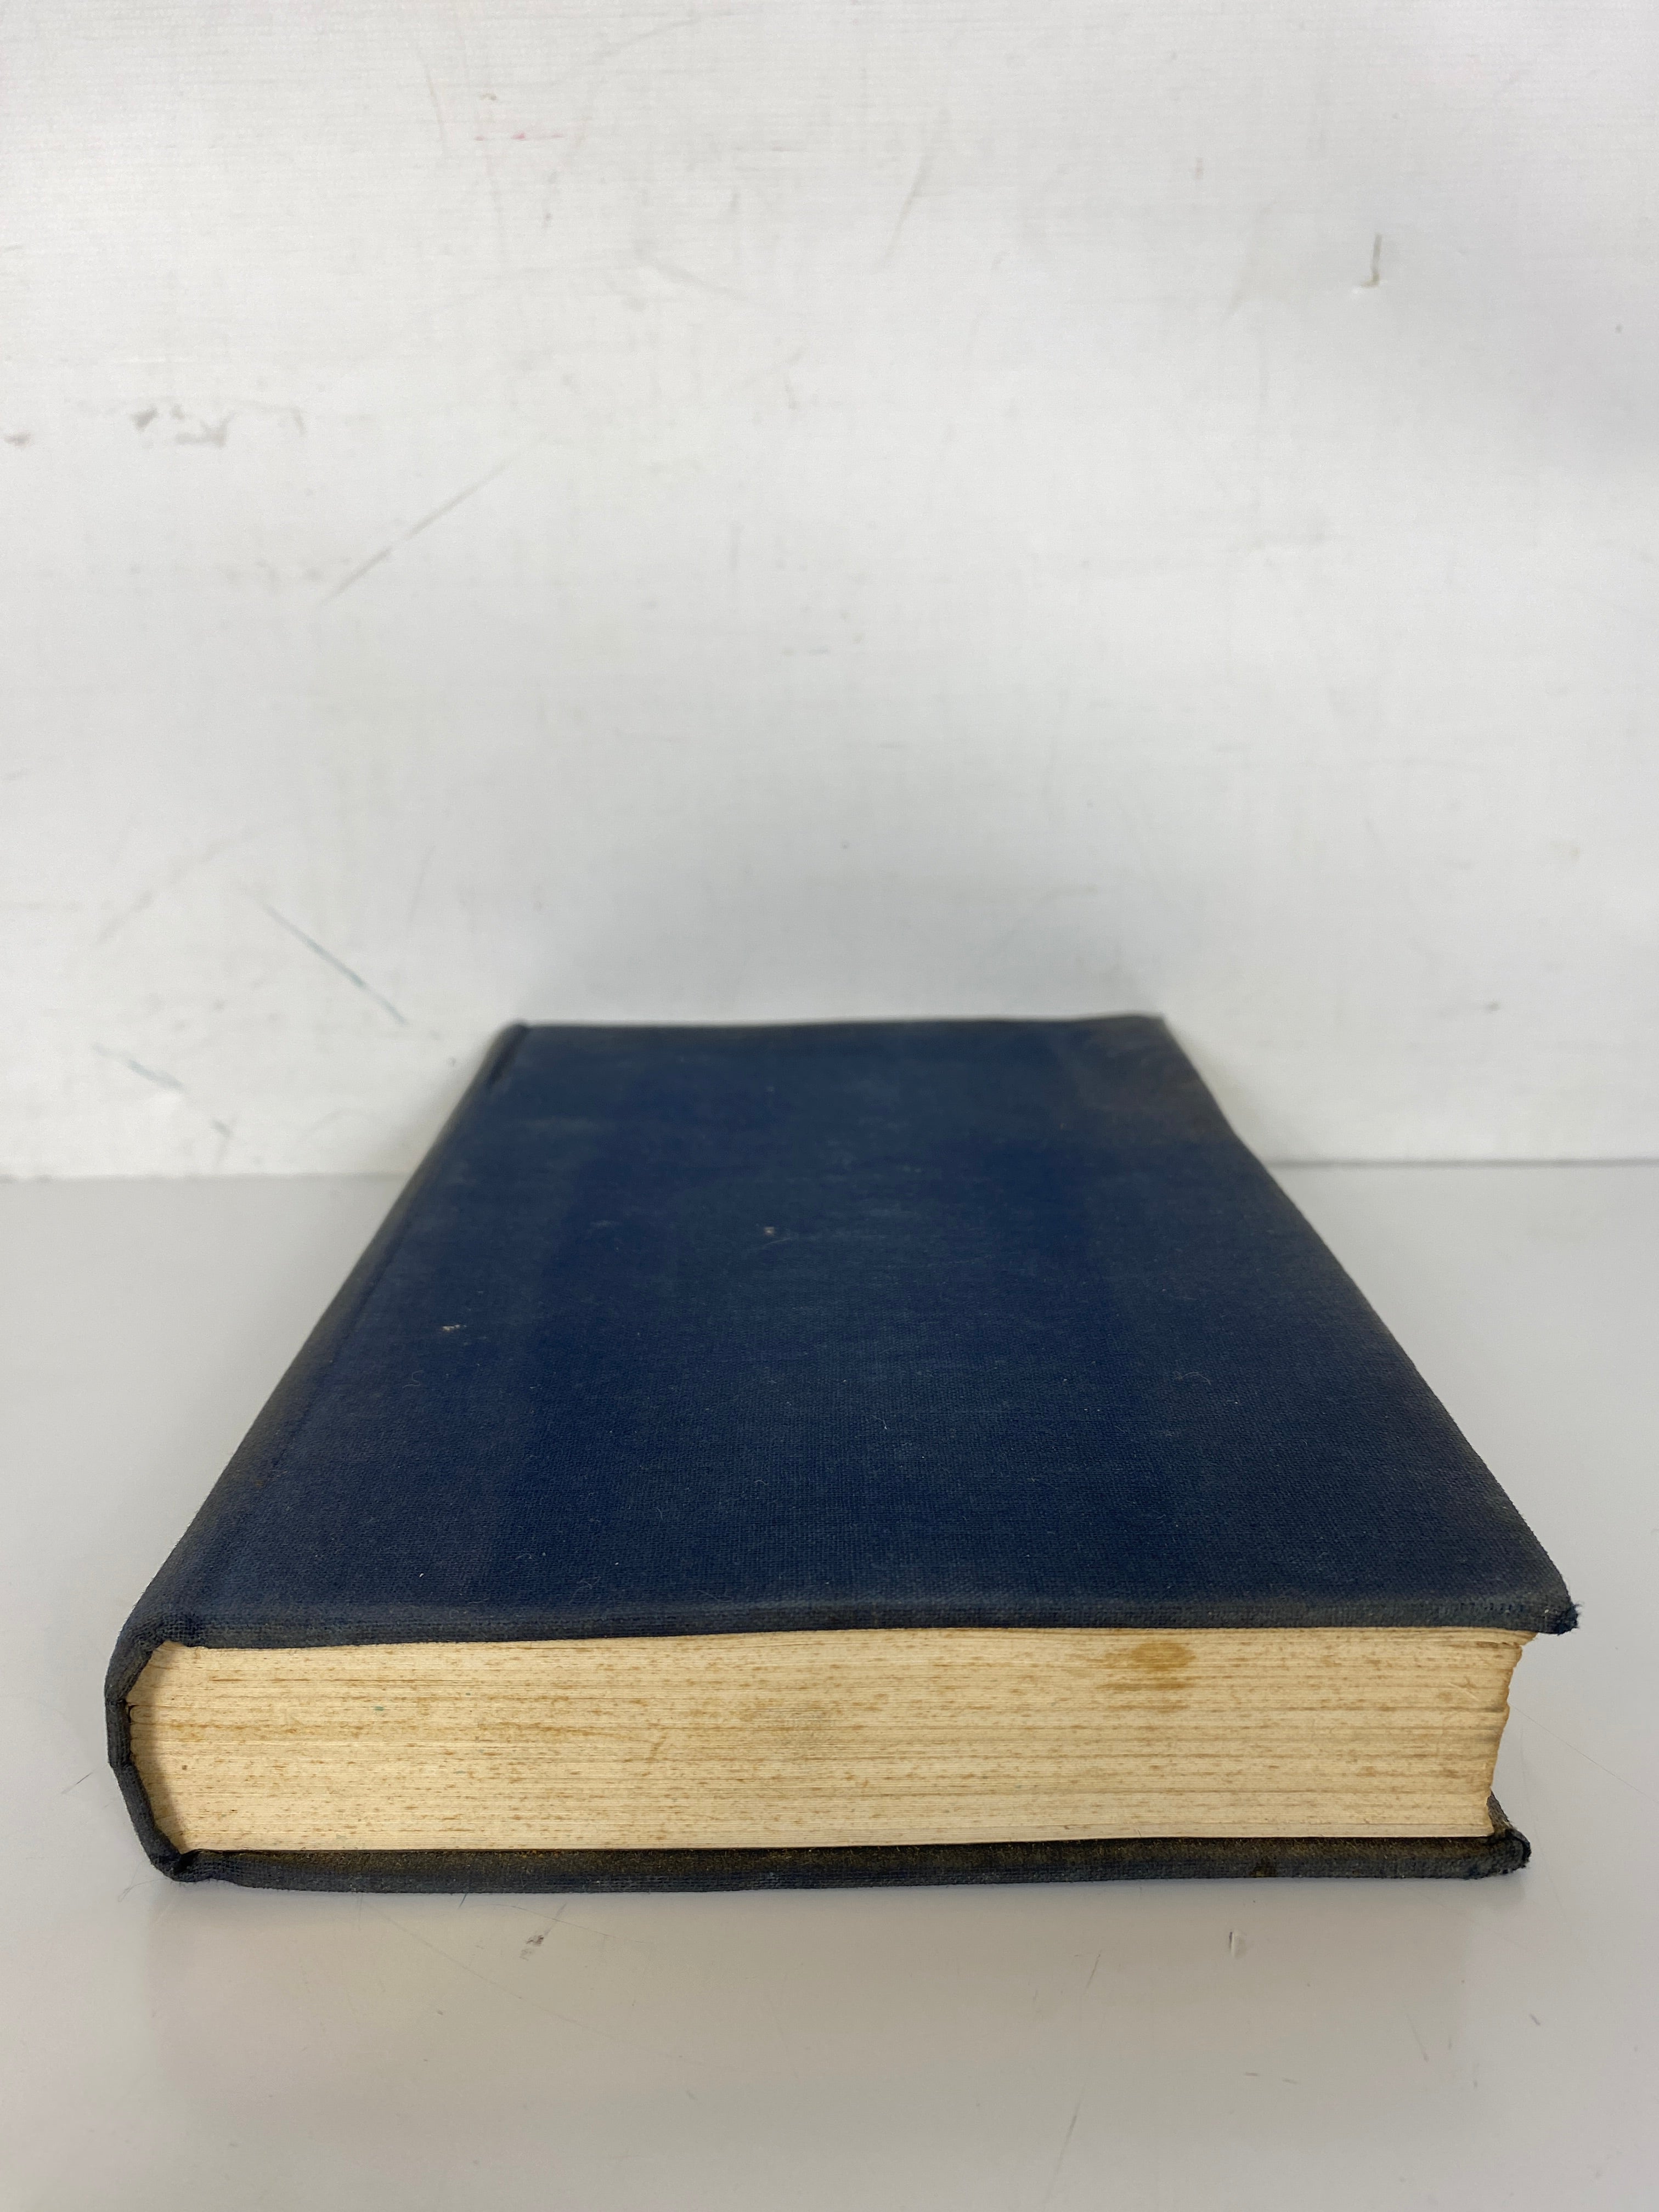 George Romney Mormon in Politics by Clark Mollenhoff (1968) First Edition HC